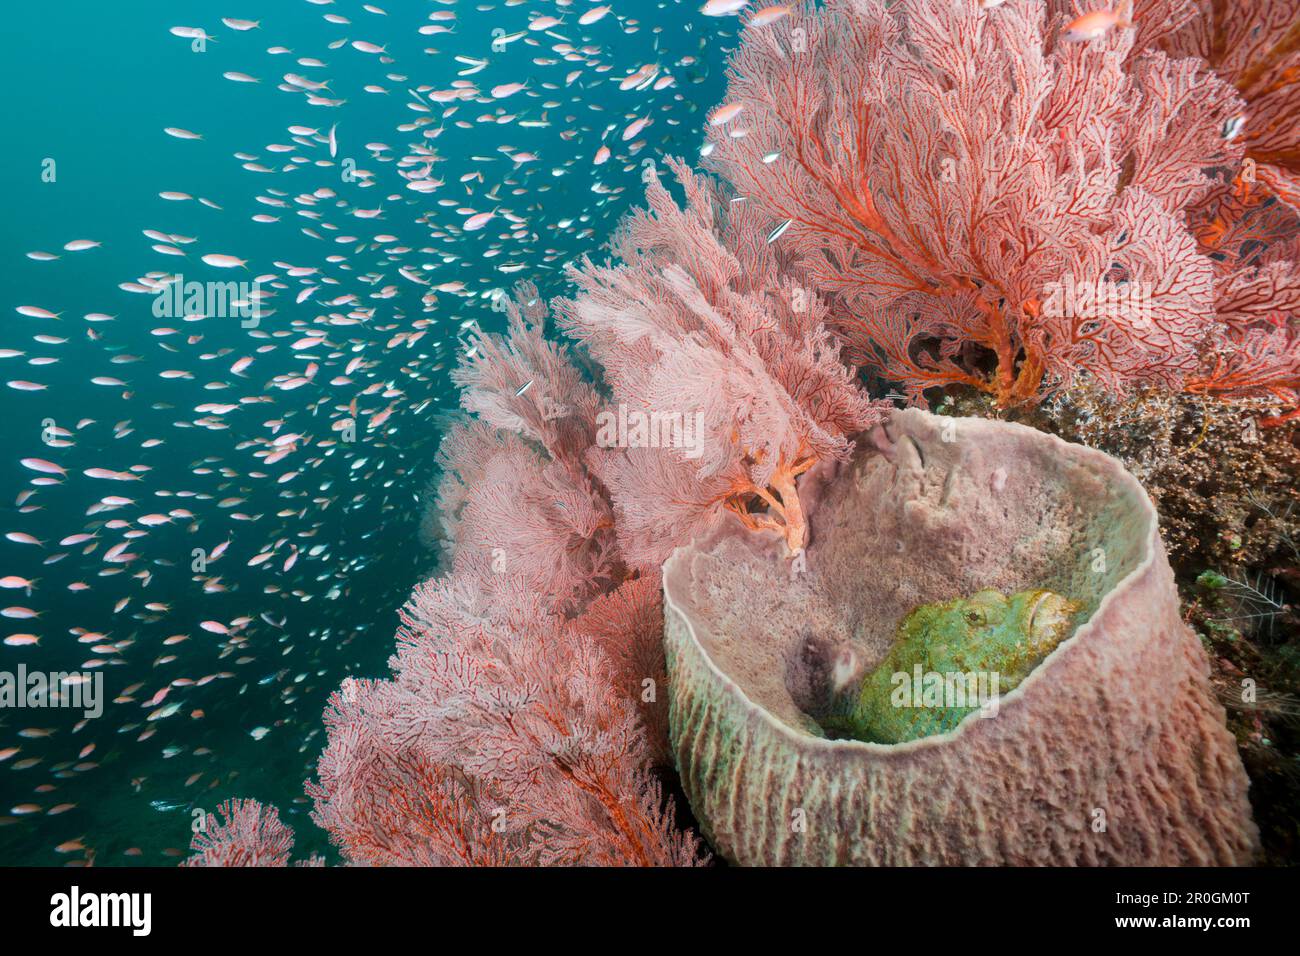 Scorpianfish inside Barrel Sponge, Scorpaenopsis oxycephalus, Xestospongia testudinaria, Amed, Bali, Indonesia Stock Photo